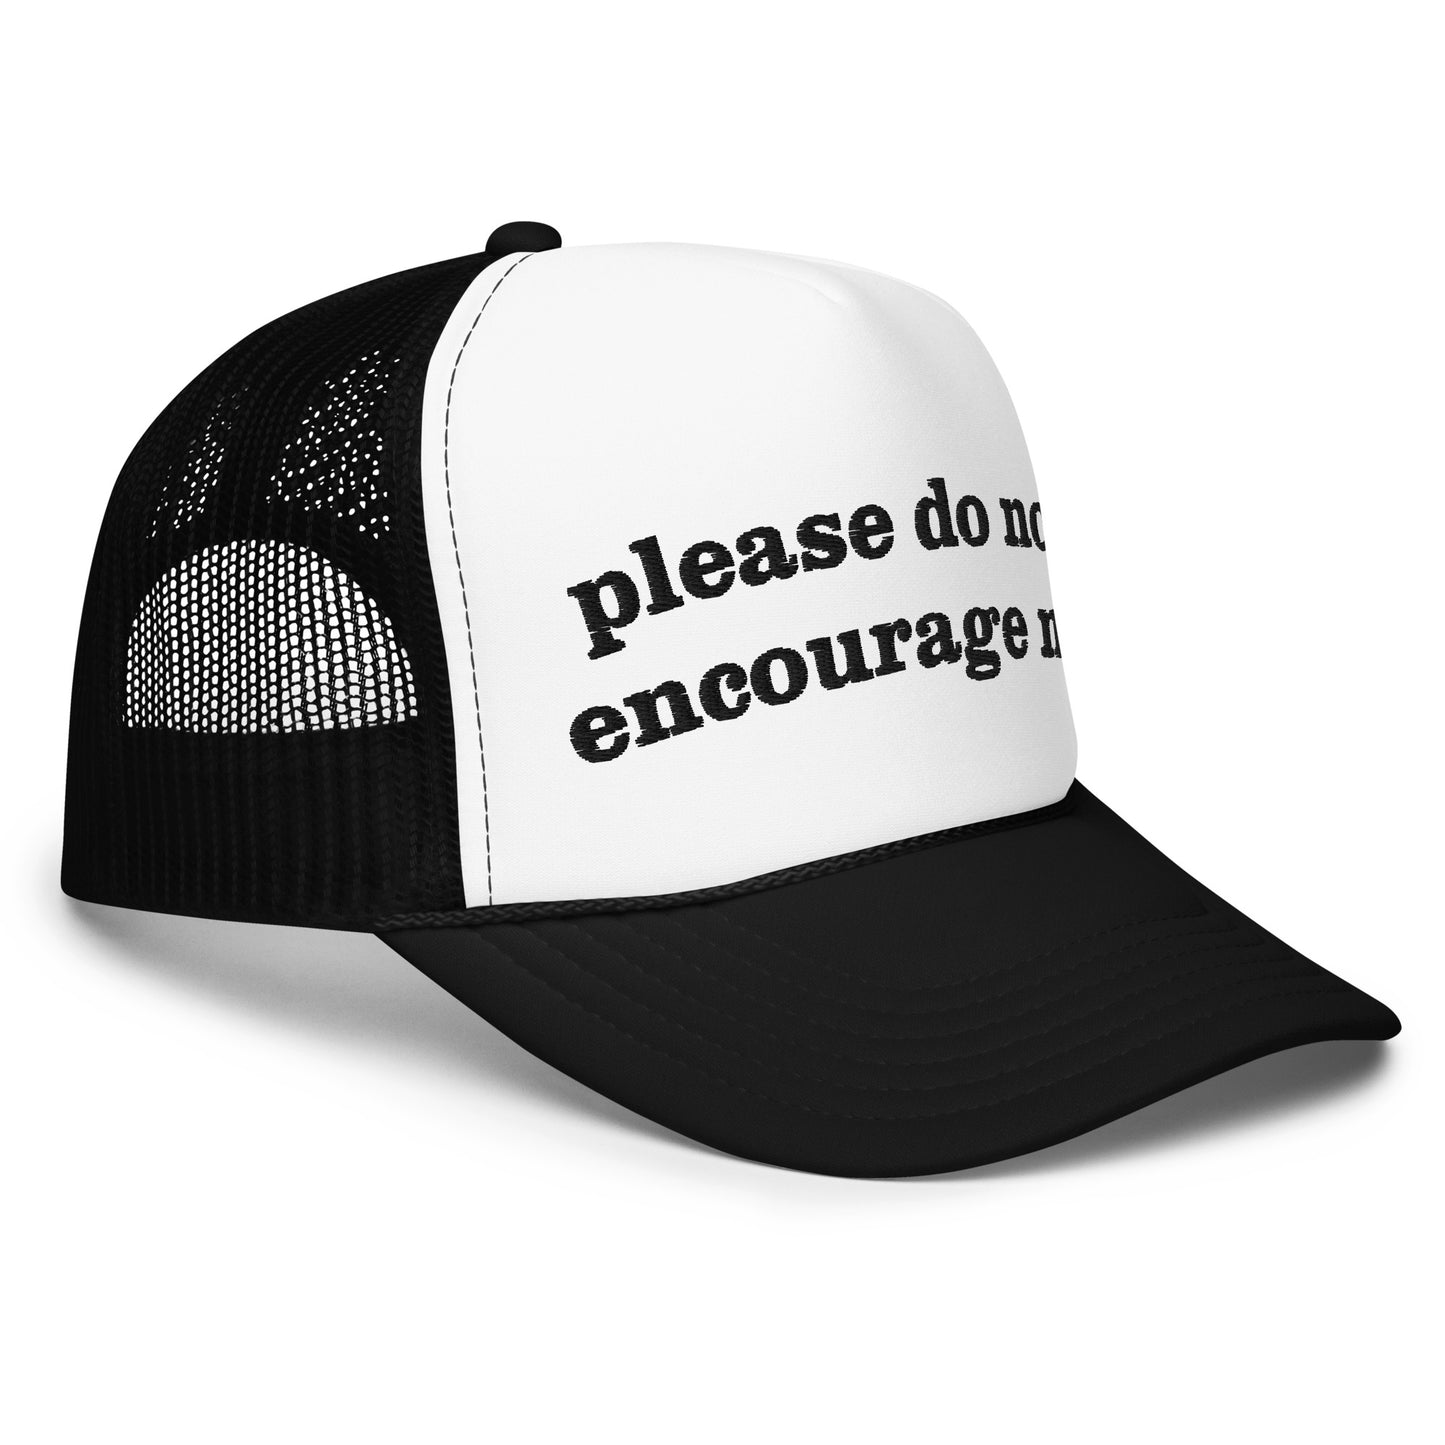 do not encourage hat